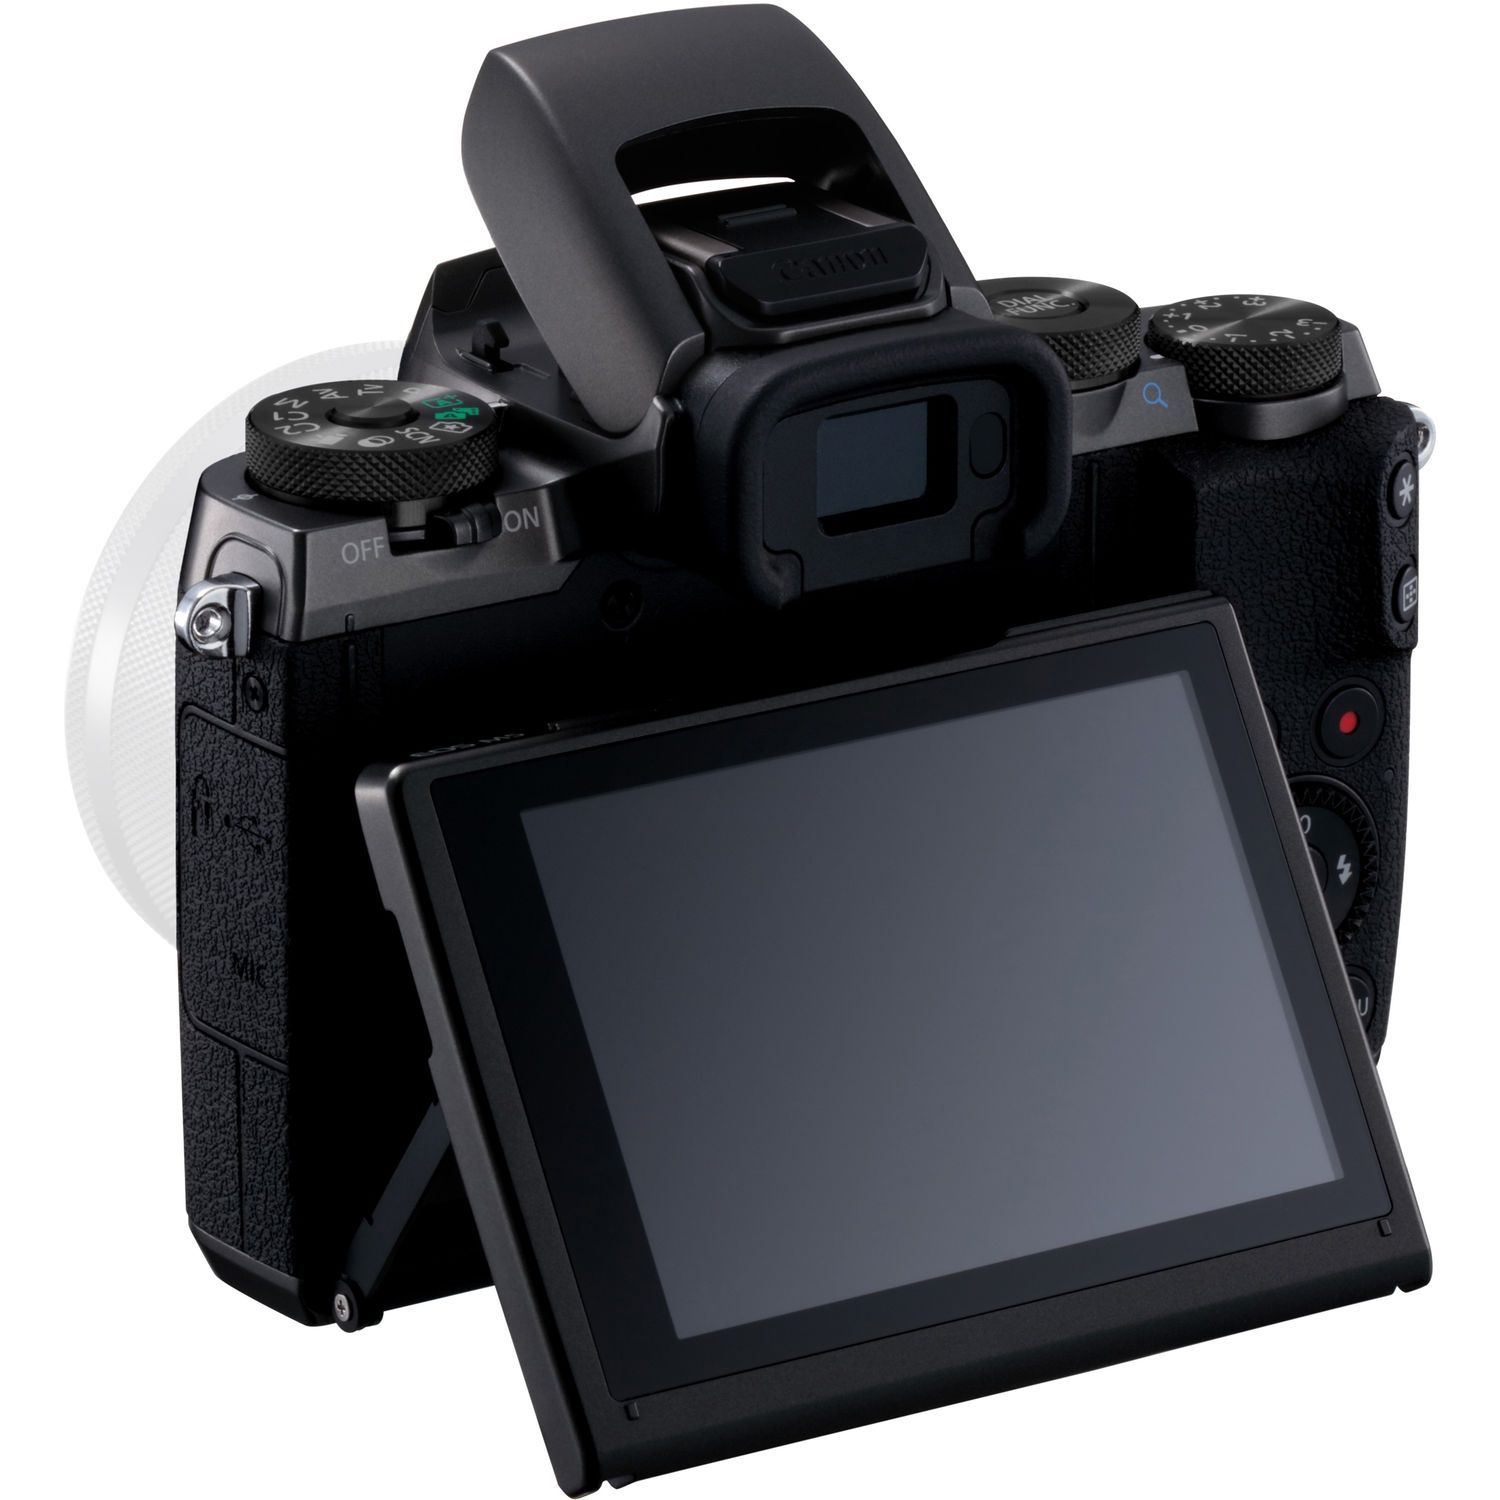 Canon EOS M5 + 18-150 mm IS STM + adaptér EF-EOS M 